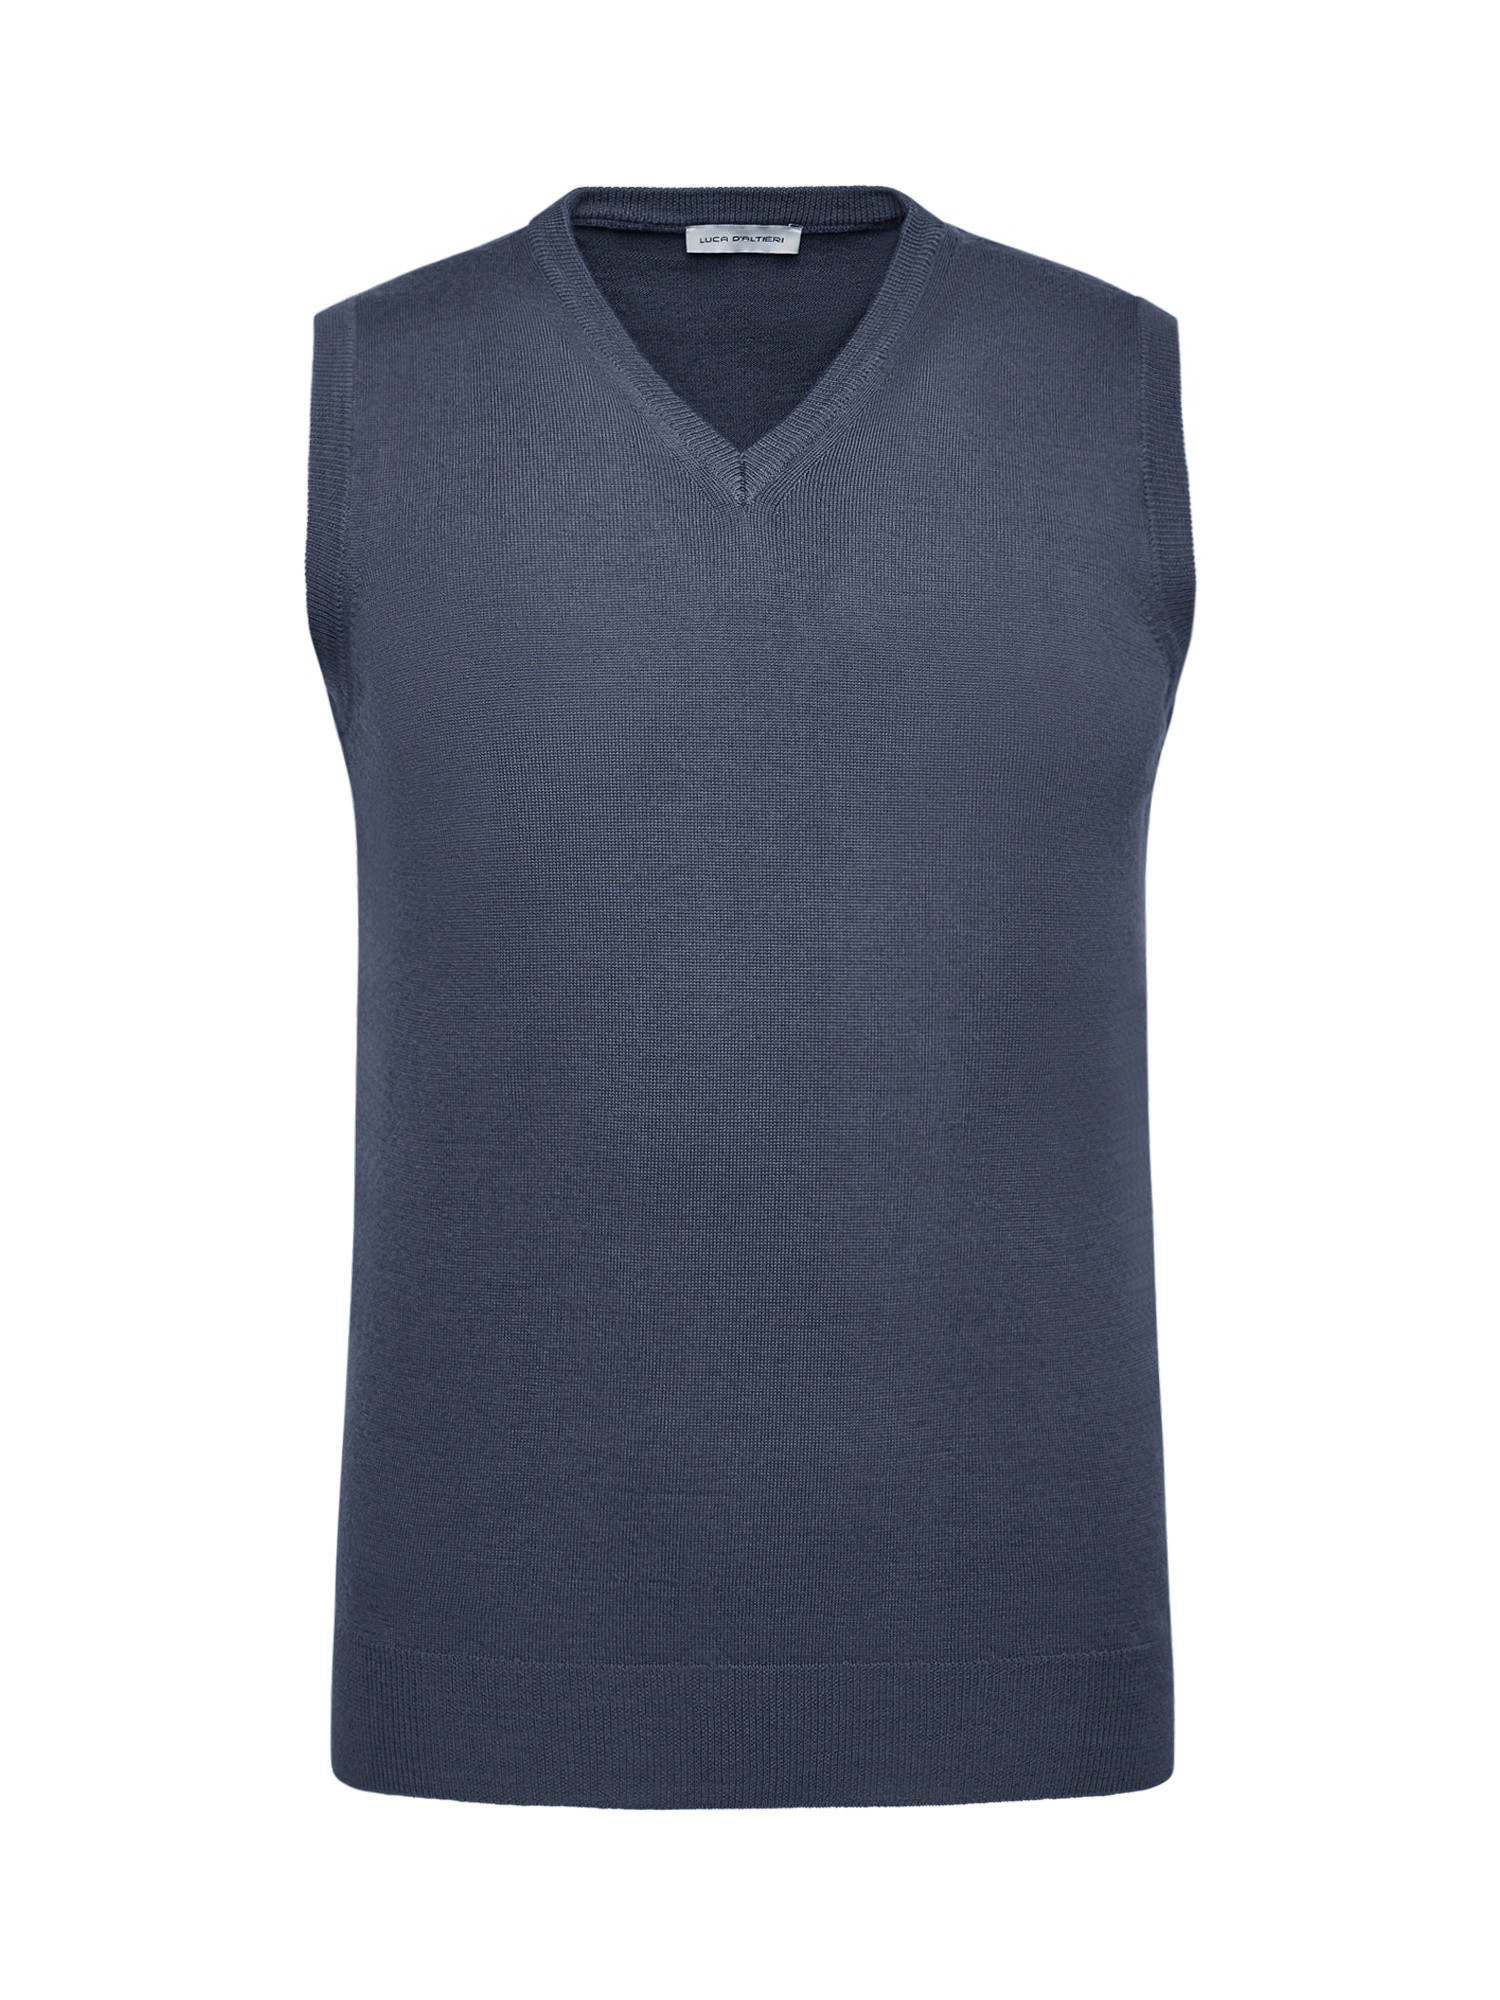 Luca D'Altieri - Merino Blend Vest - Machine Washable, Dark Blue, large image number 0